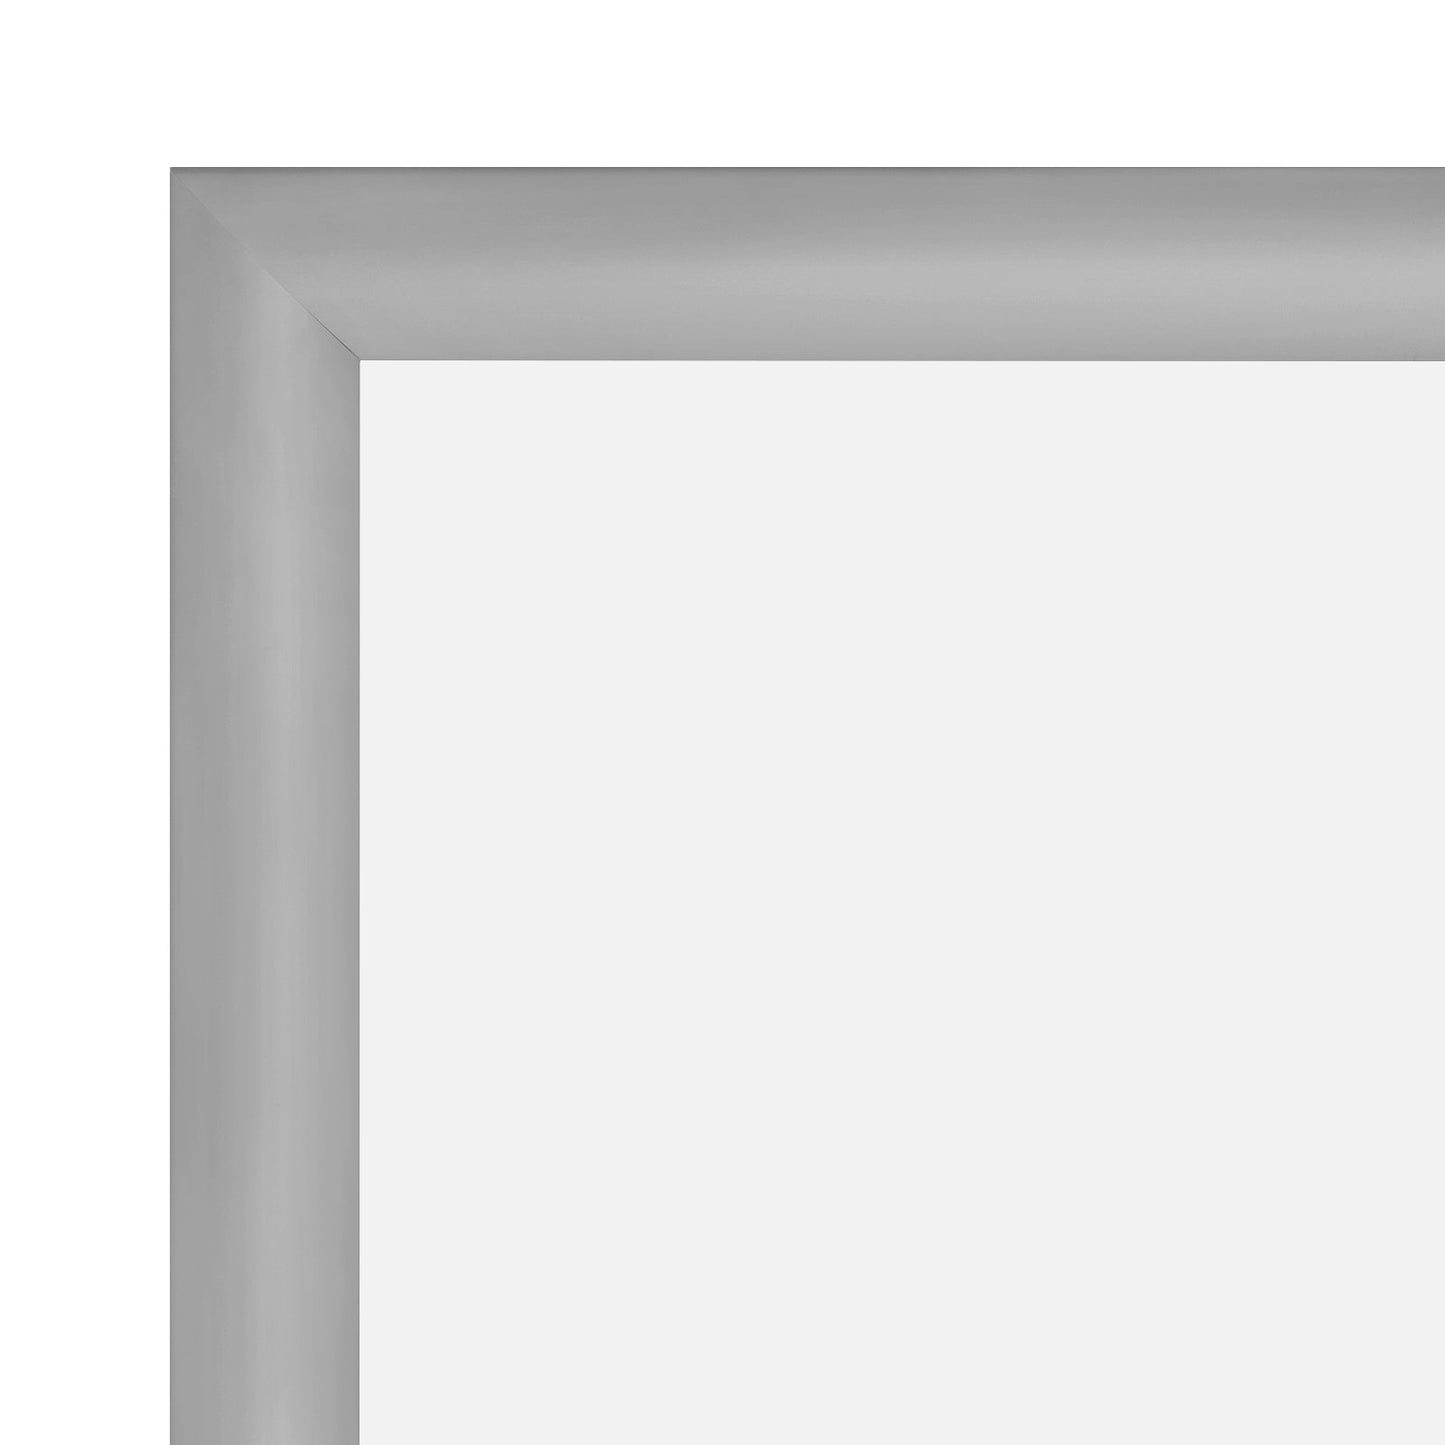 10x13 Silver SnapeZo® Snap Frame - 1.2" Profile - Snap Frames Direct